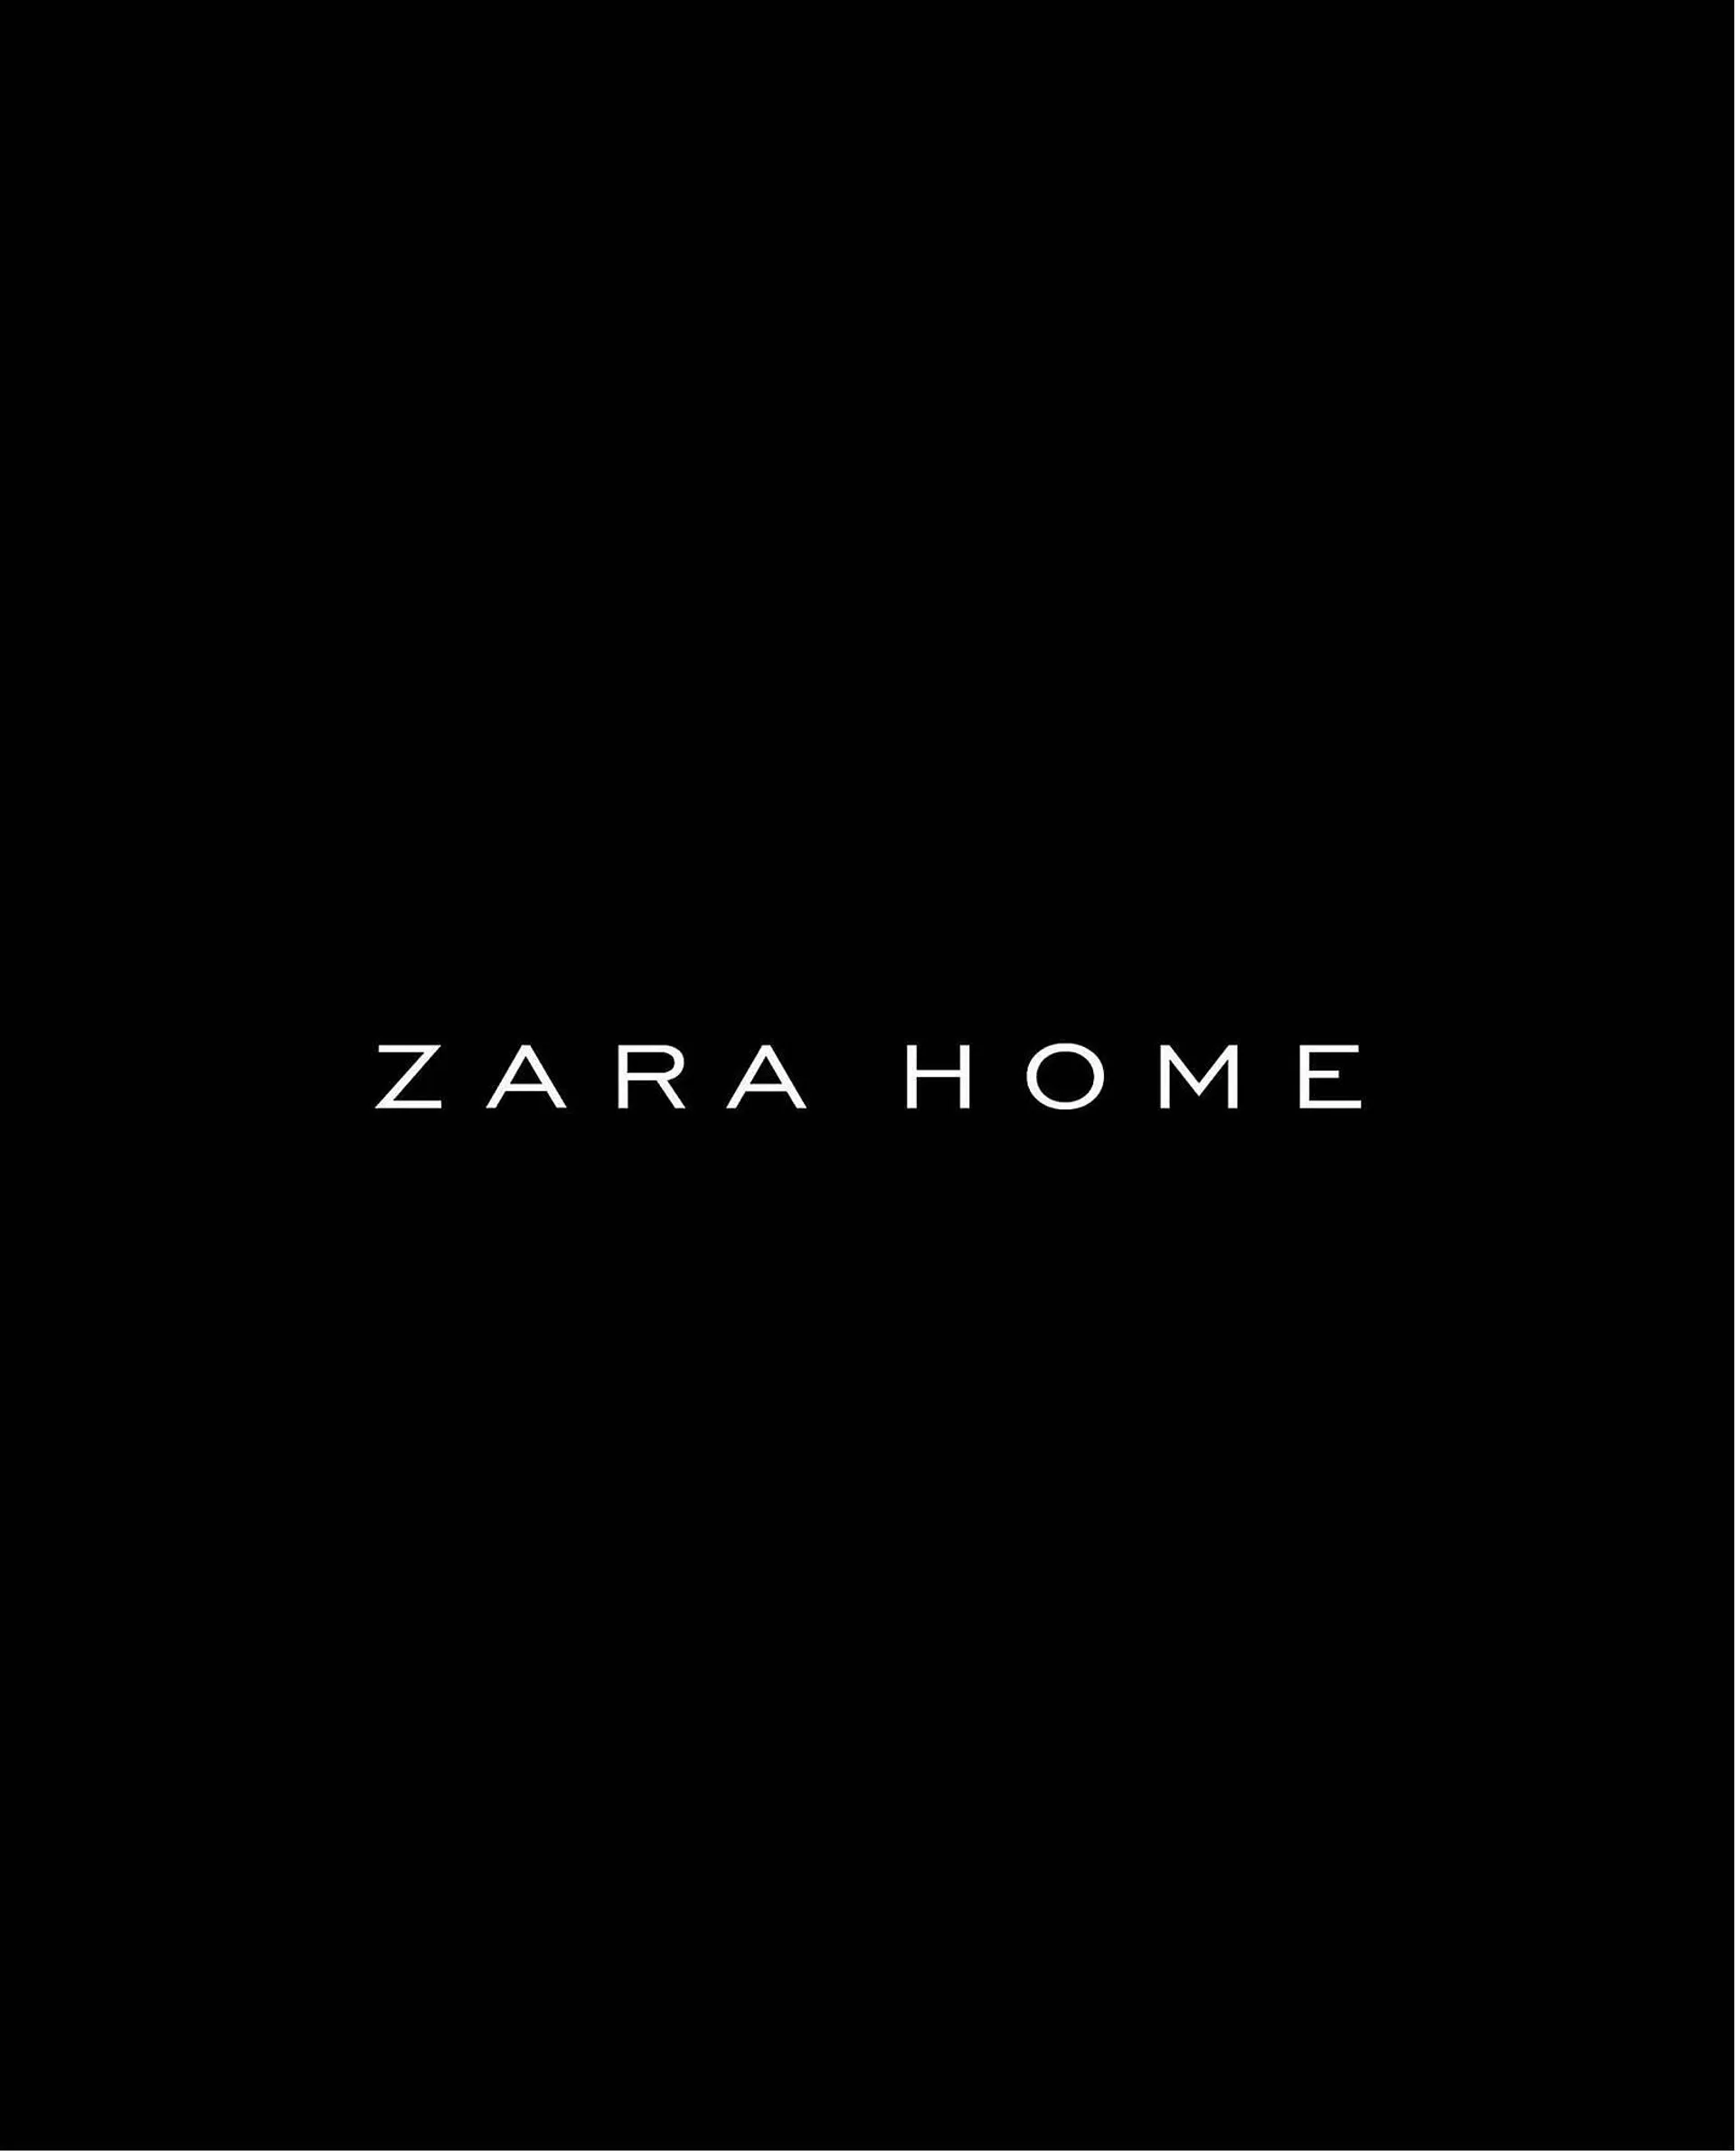 ZARA HOME reklamblad - 12